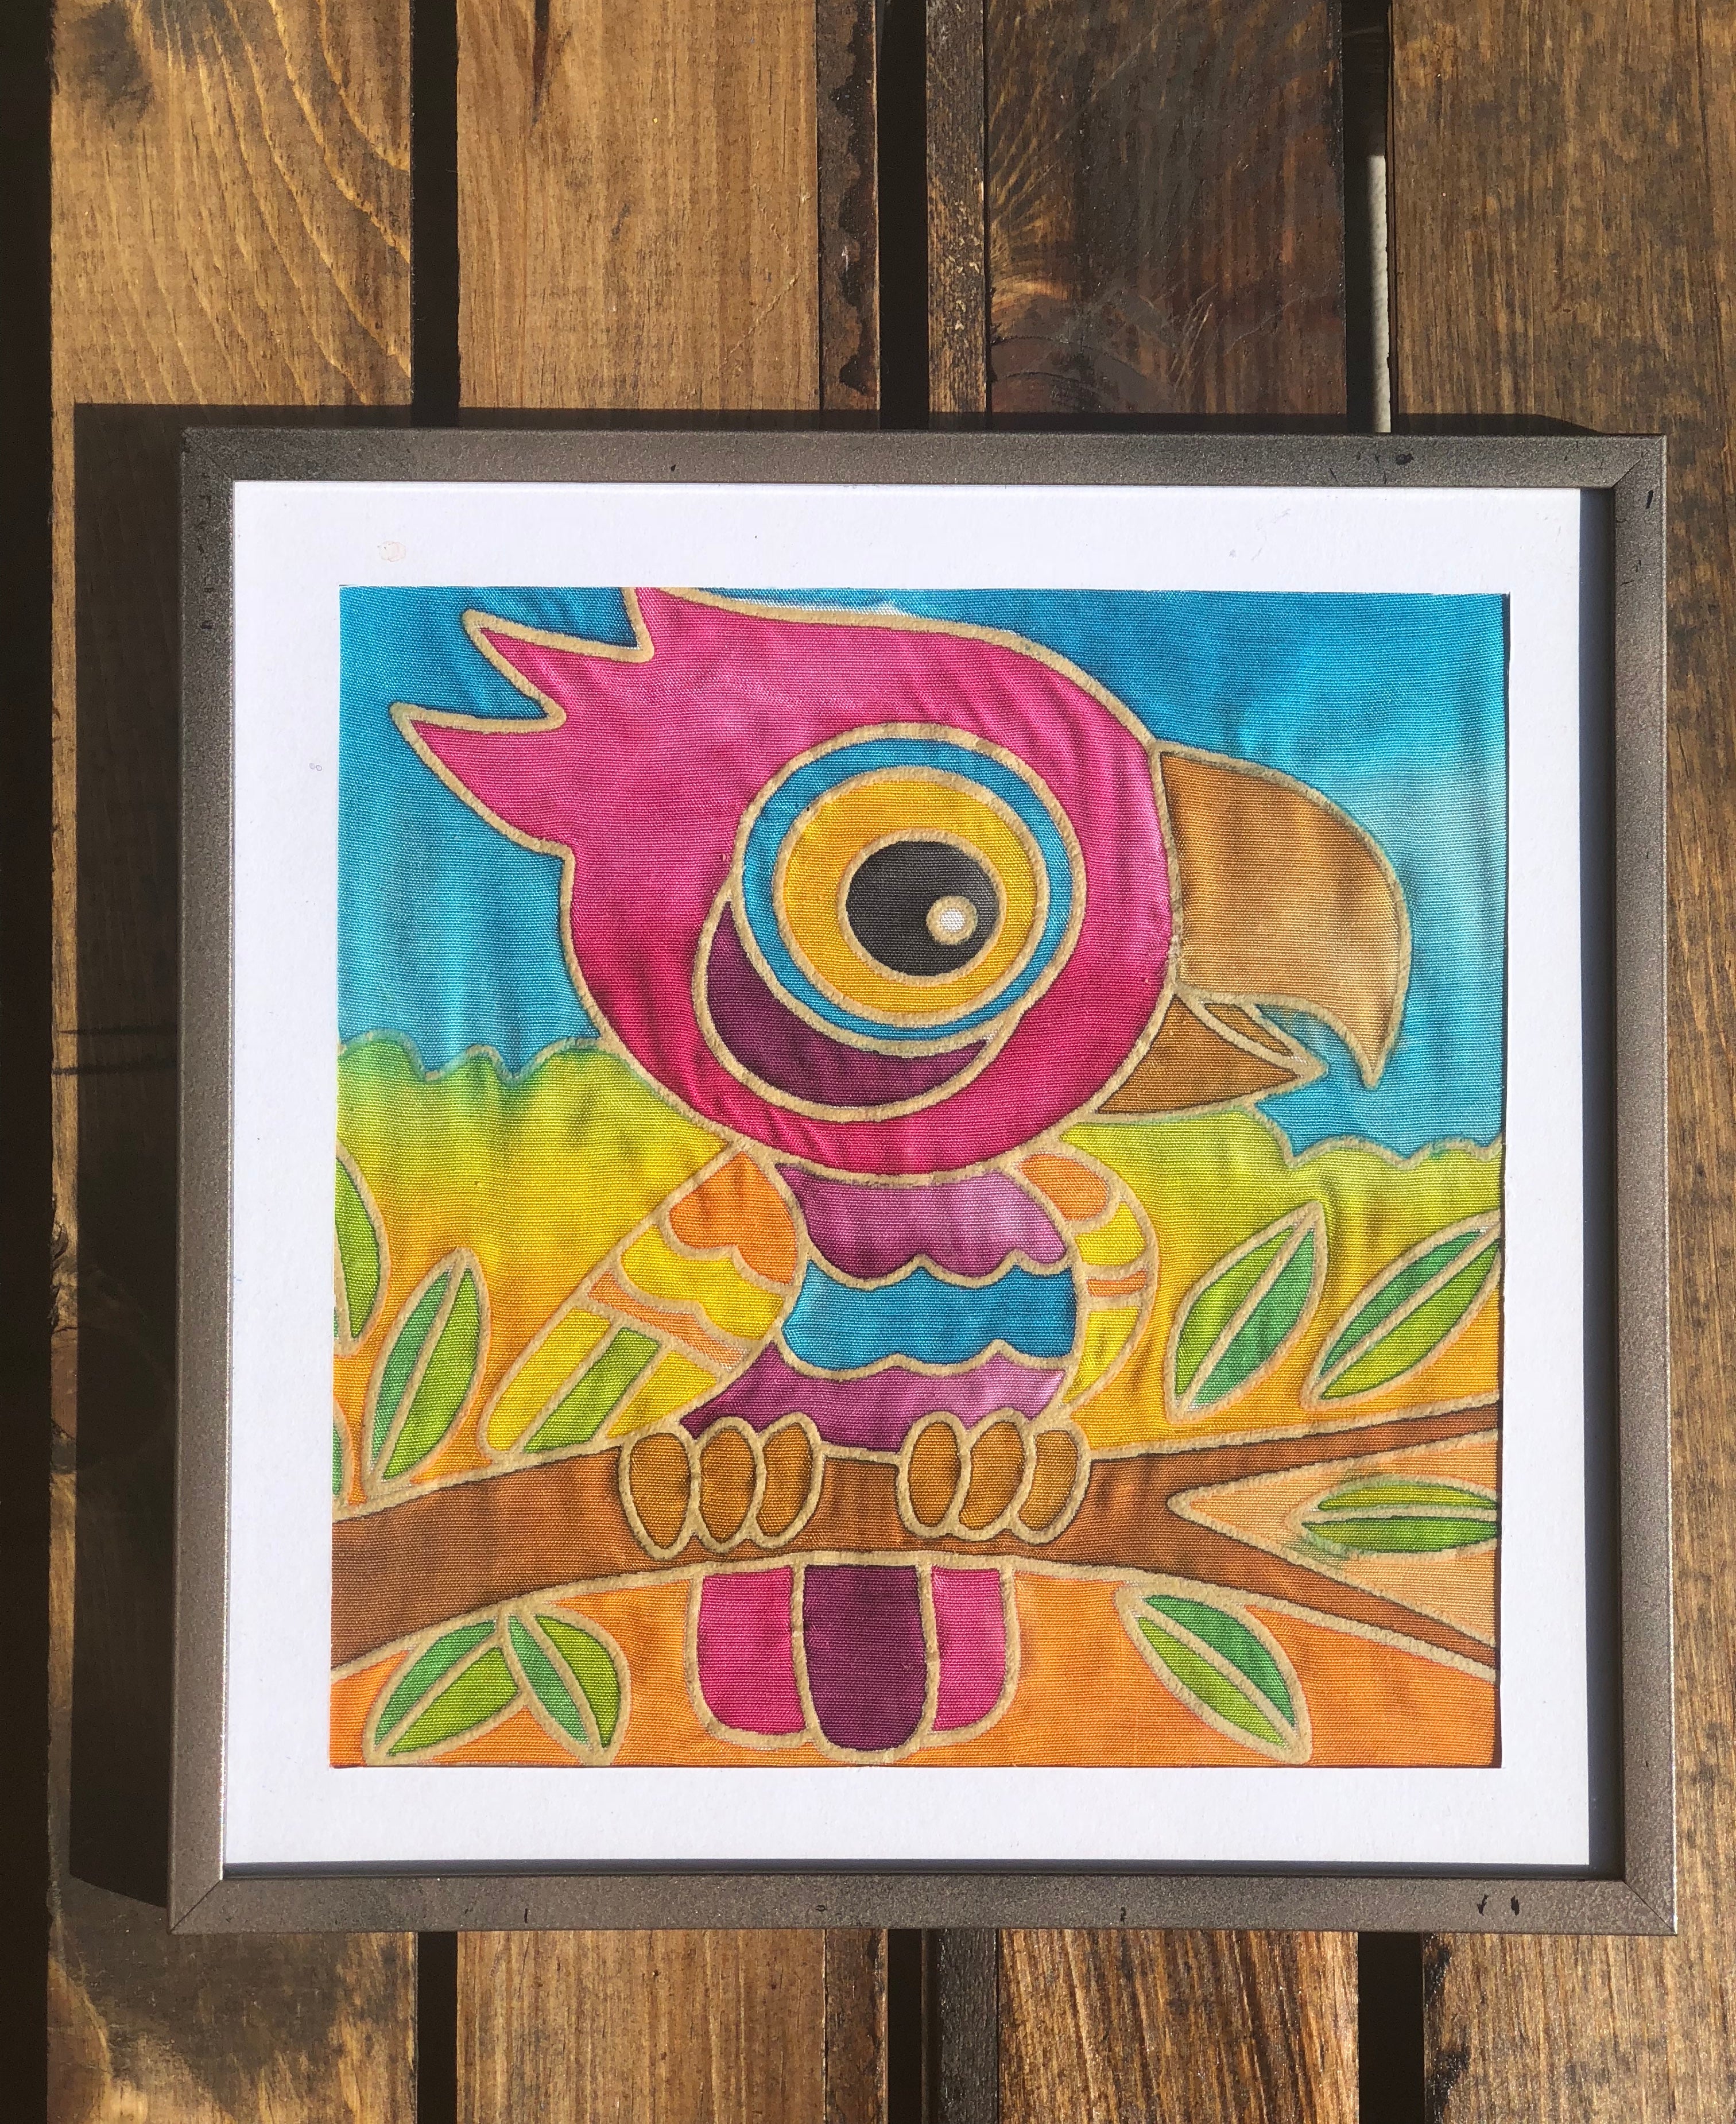 DIY Batik Parrot Fabric Painting Kit - 8x8 Inch Pre Drawn Wax Design, Paint, Brush and Palette